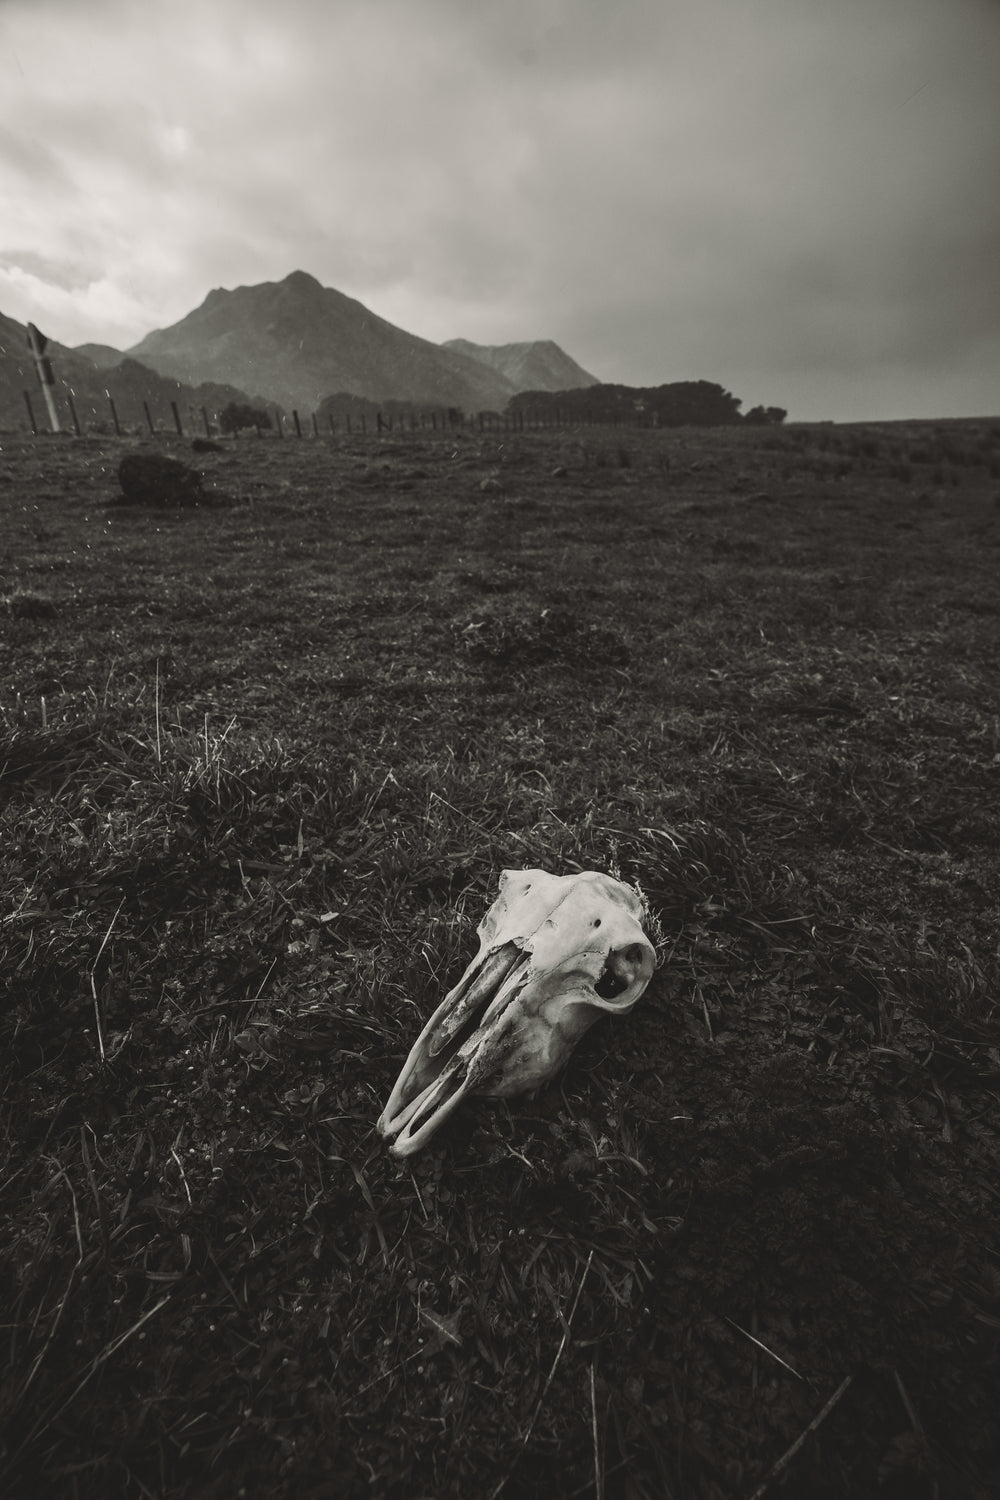 an animal skull left behind